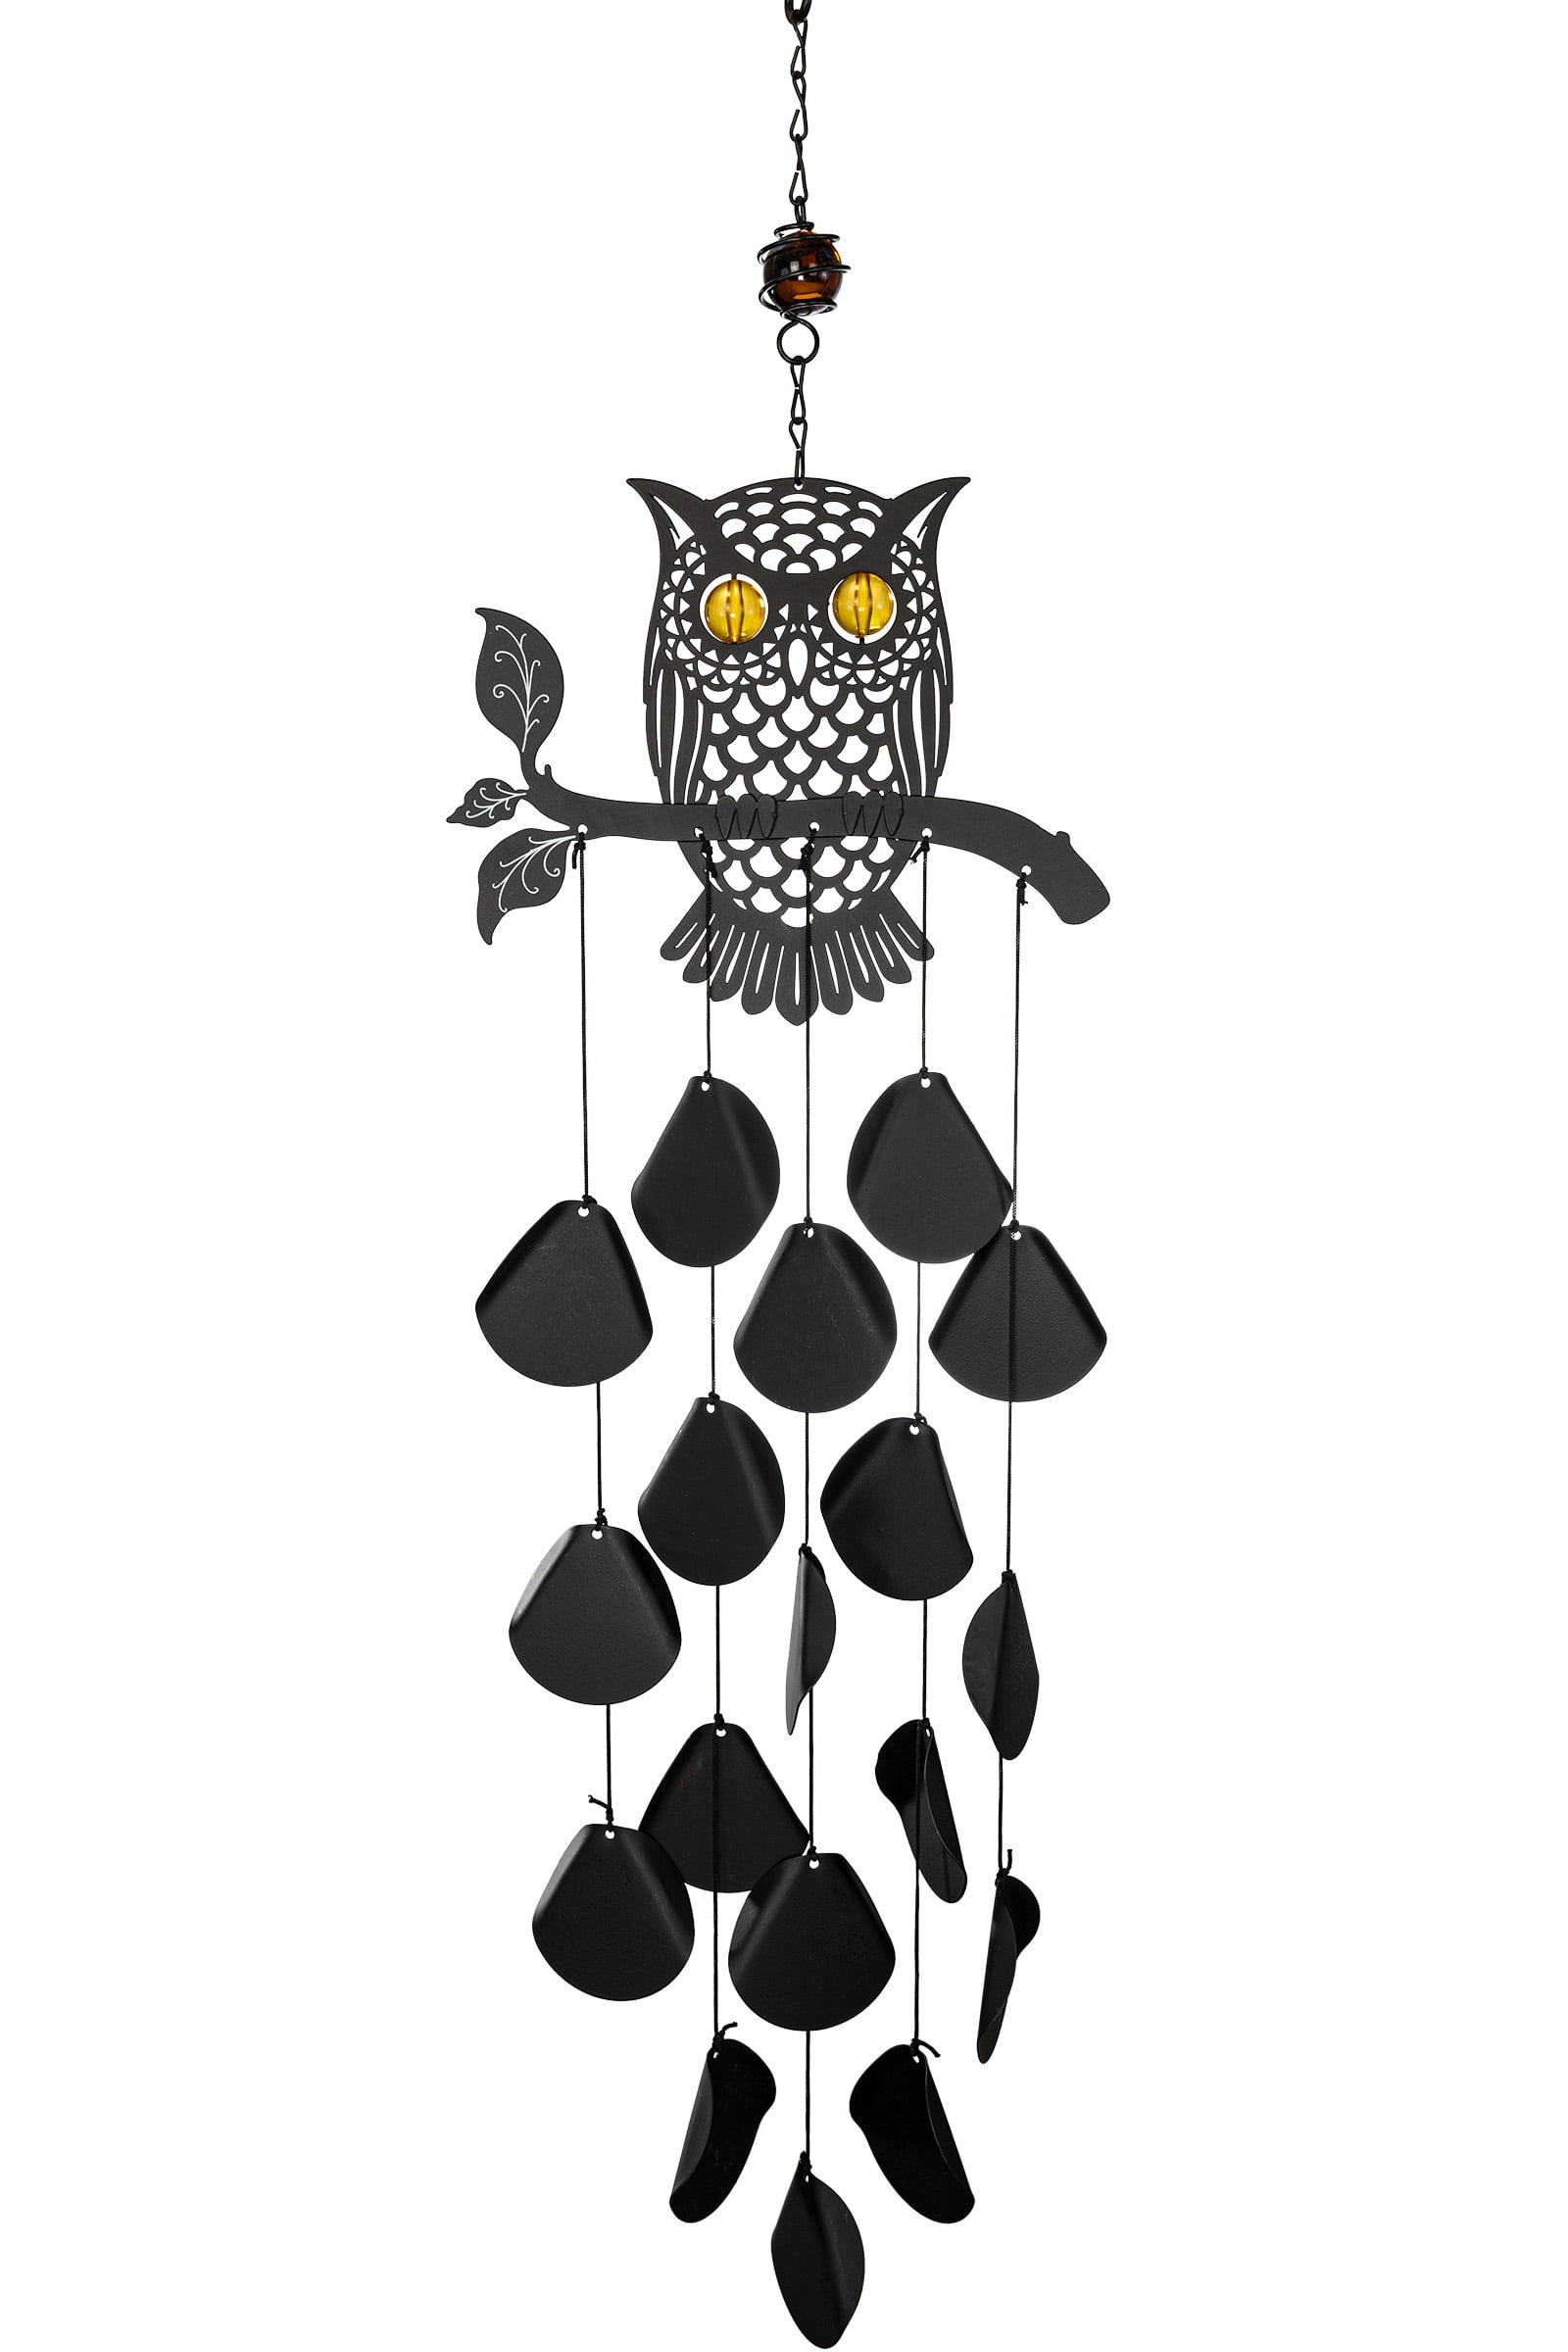 VP Home Tribal Owl Outdoor Garden Decor Wind Chime Black